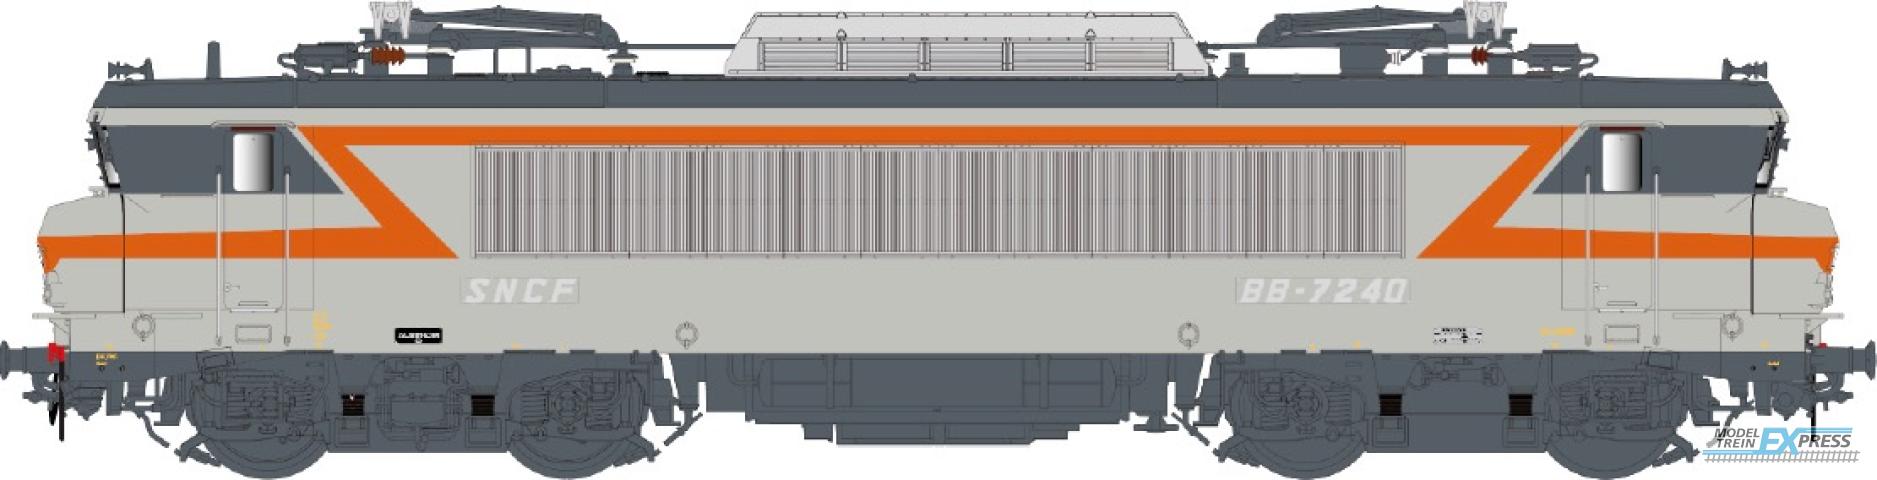 LS Models 11207 BB7240, betongrijs/oranje, nummerplaten / Ep. IV / SNCF / HO / DC / 1 P.